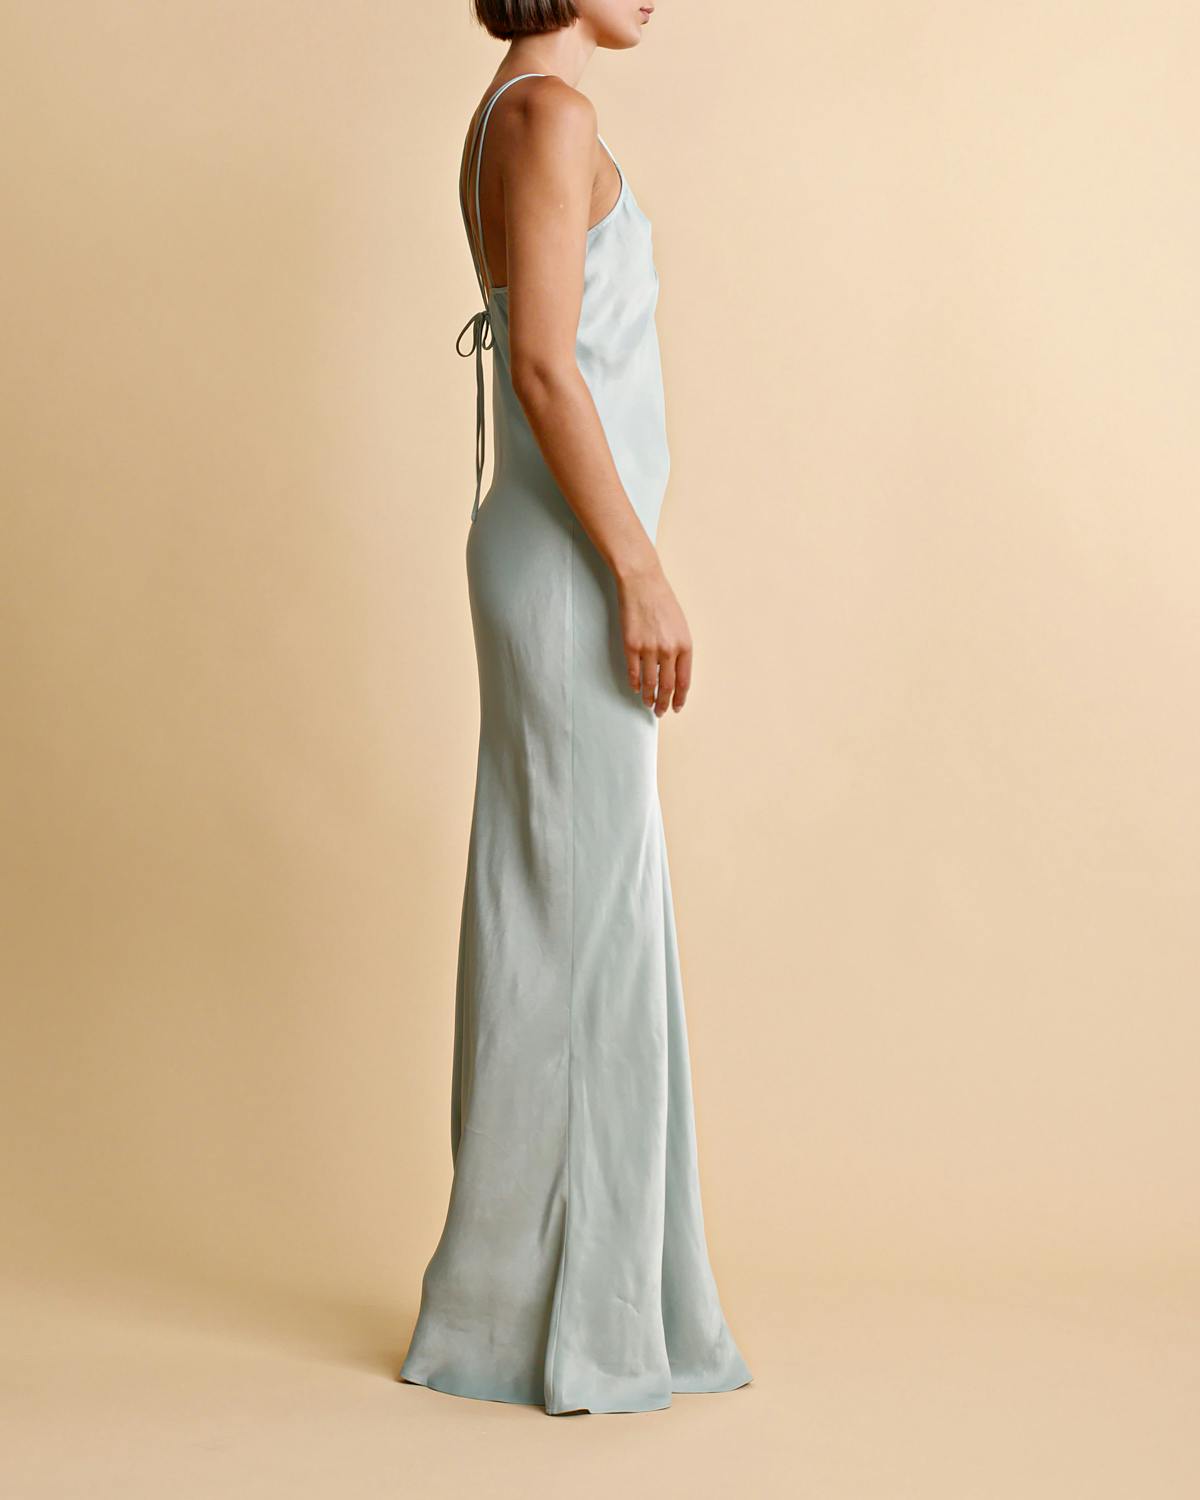 Crepe Satin Strap Dress, Turquoise. Image #5